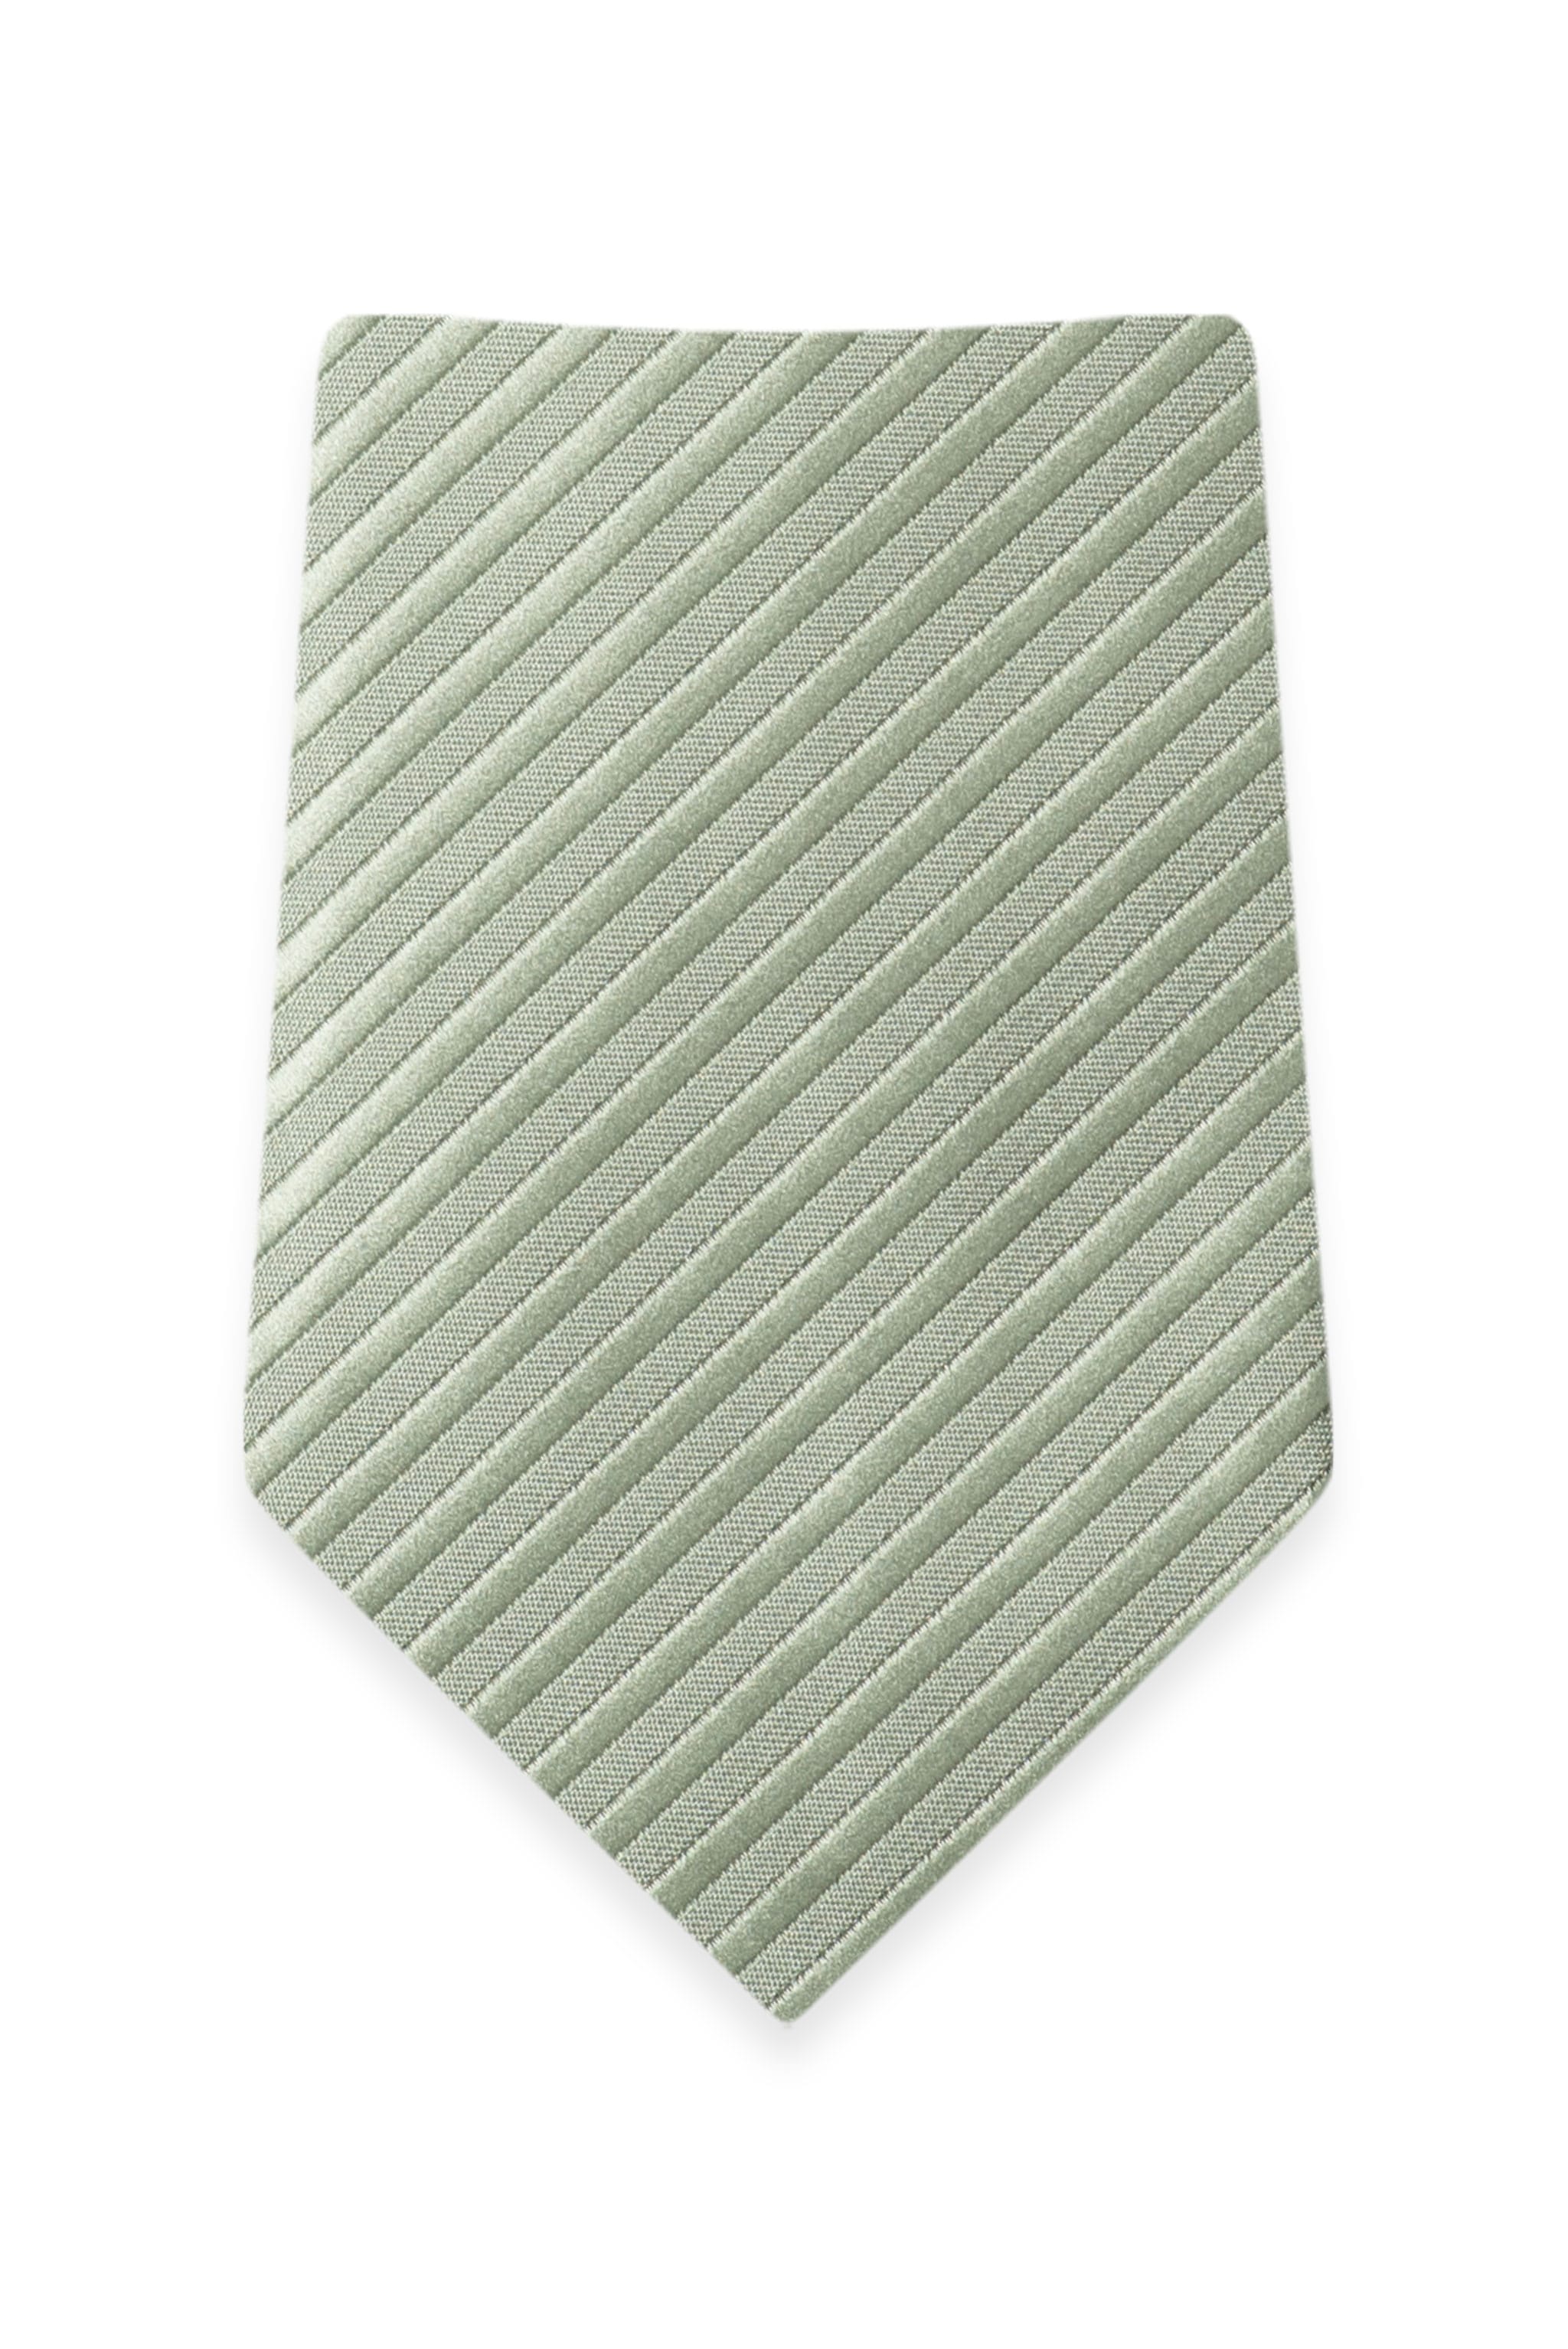 Striped Sage Self-Tie Windsor Tie